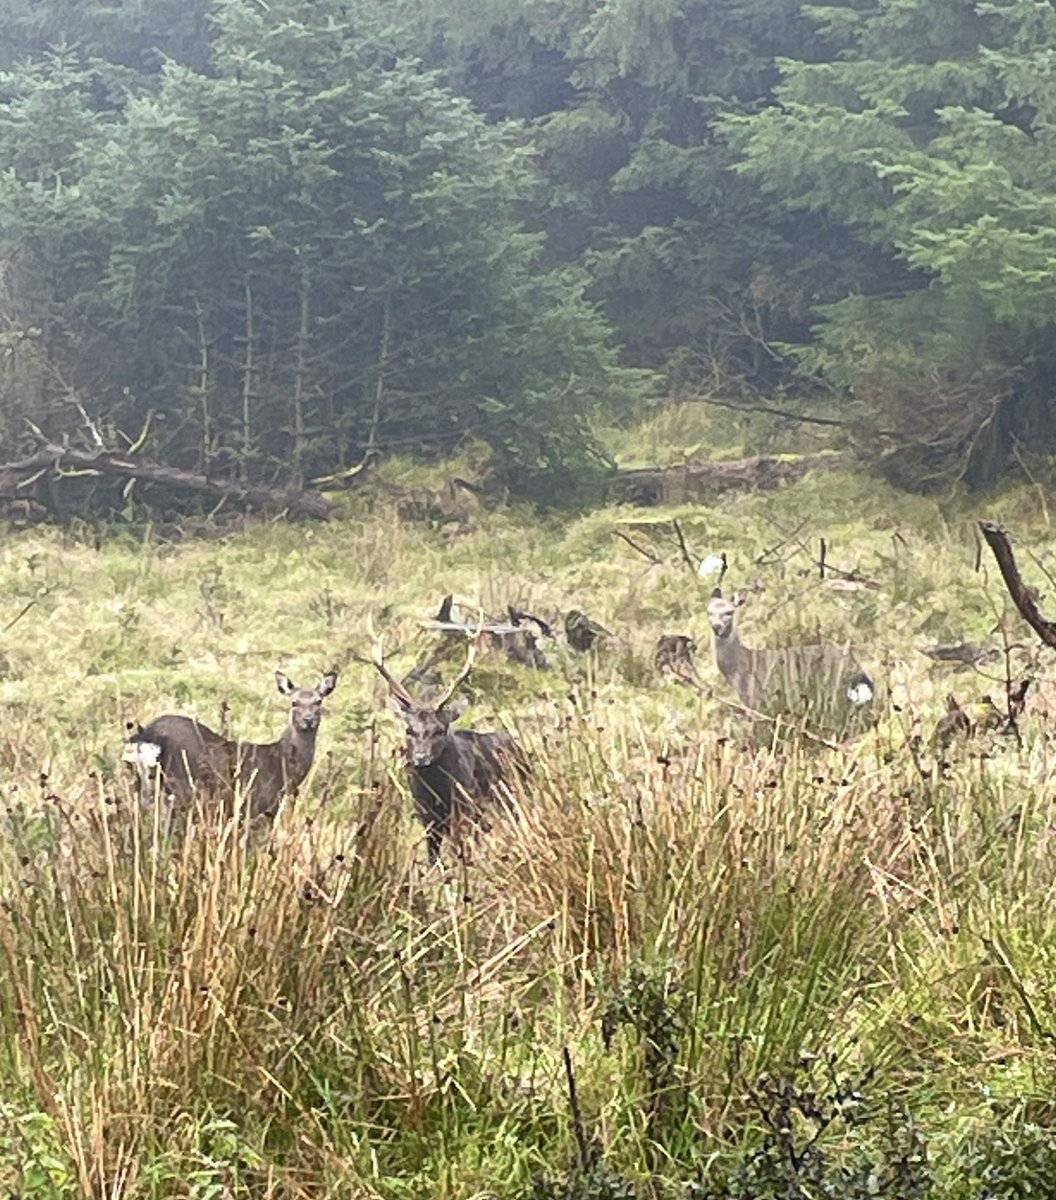 Normal deer service resumed on this morning’s walk 🥰 #Conor #Darragh #Carla 🥰🥰🥰